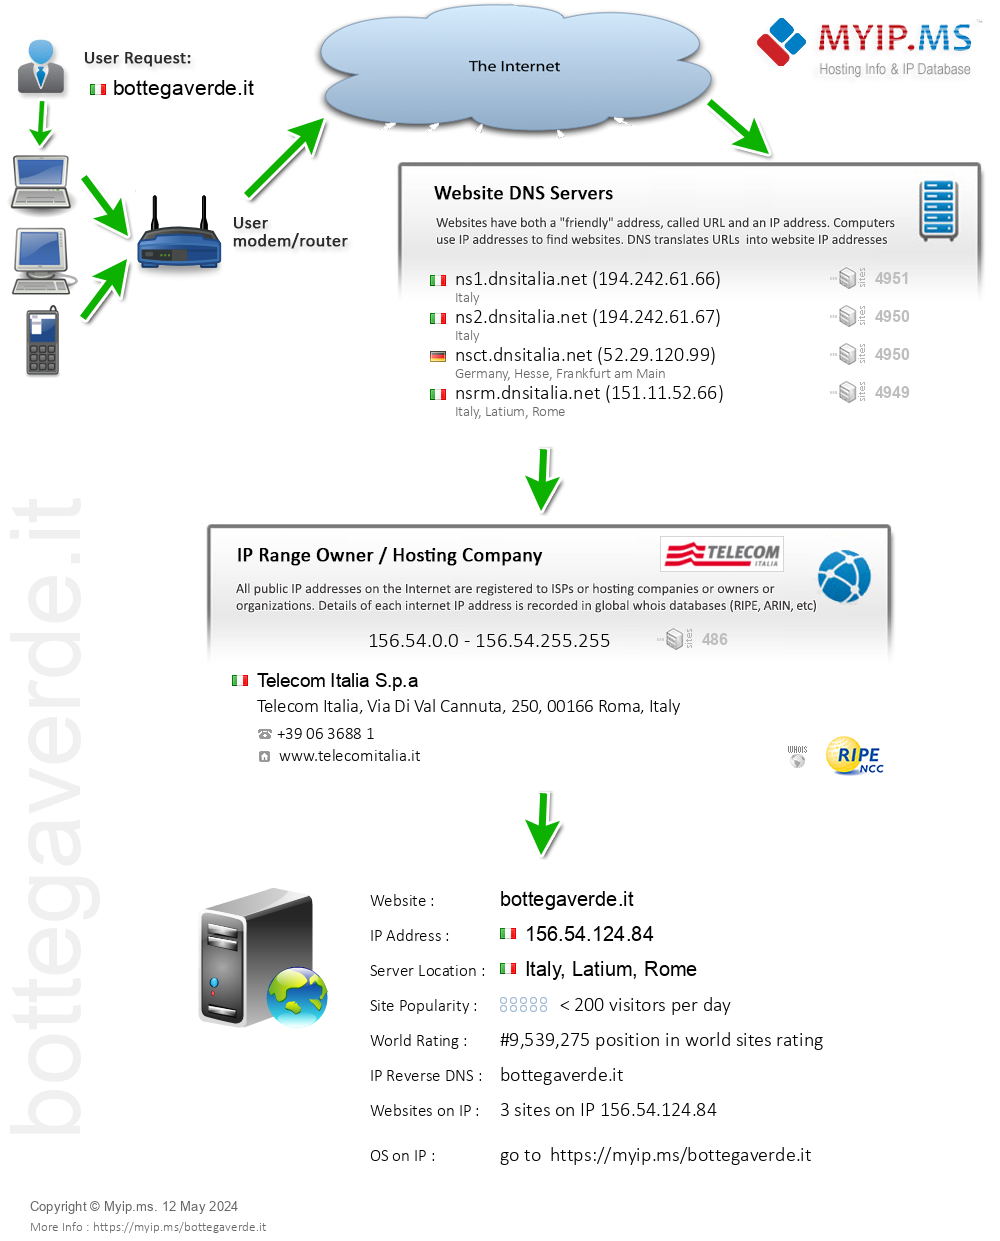 Bottegaverde.it - Website Hosting Visual IP Diagram